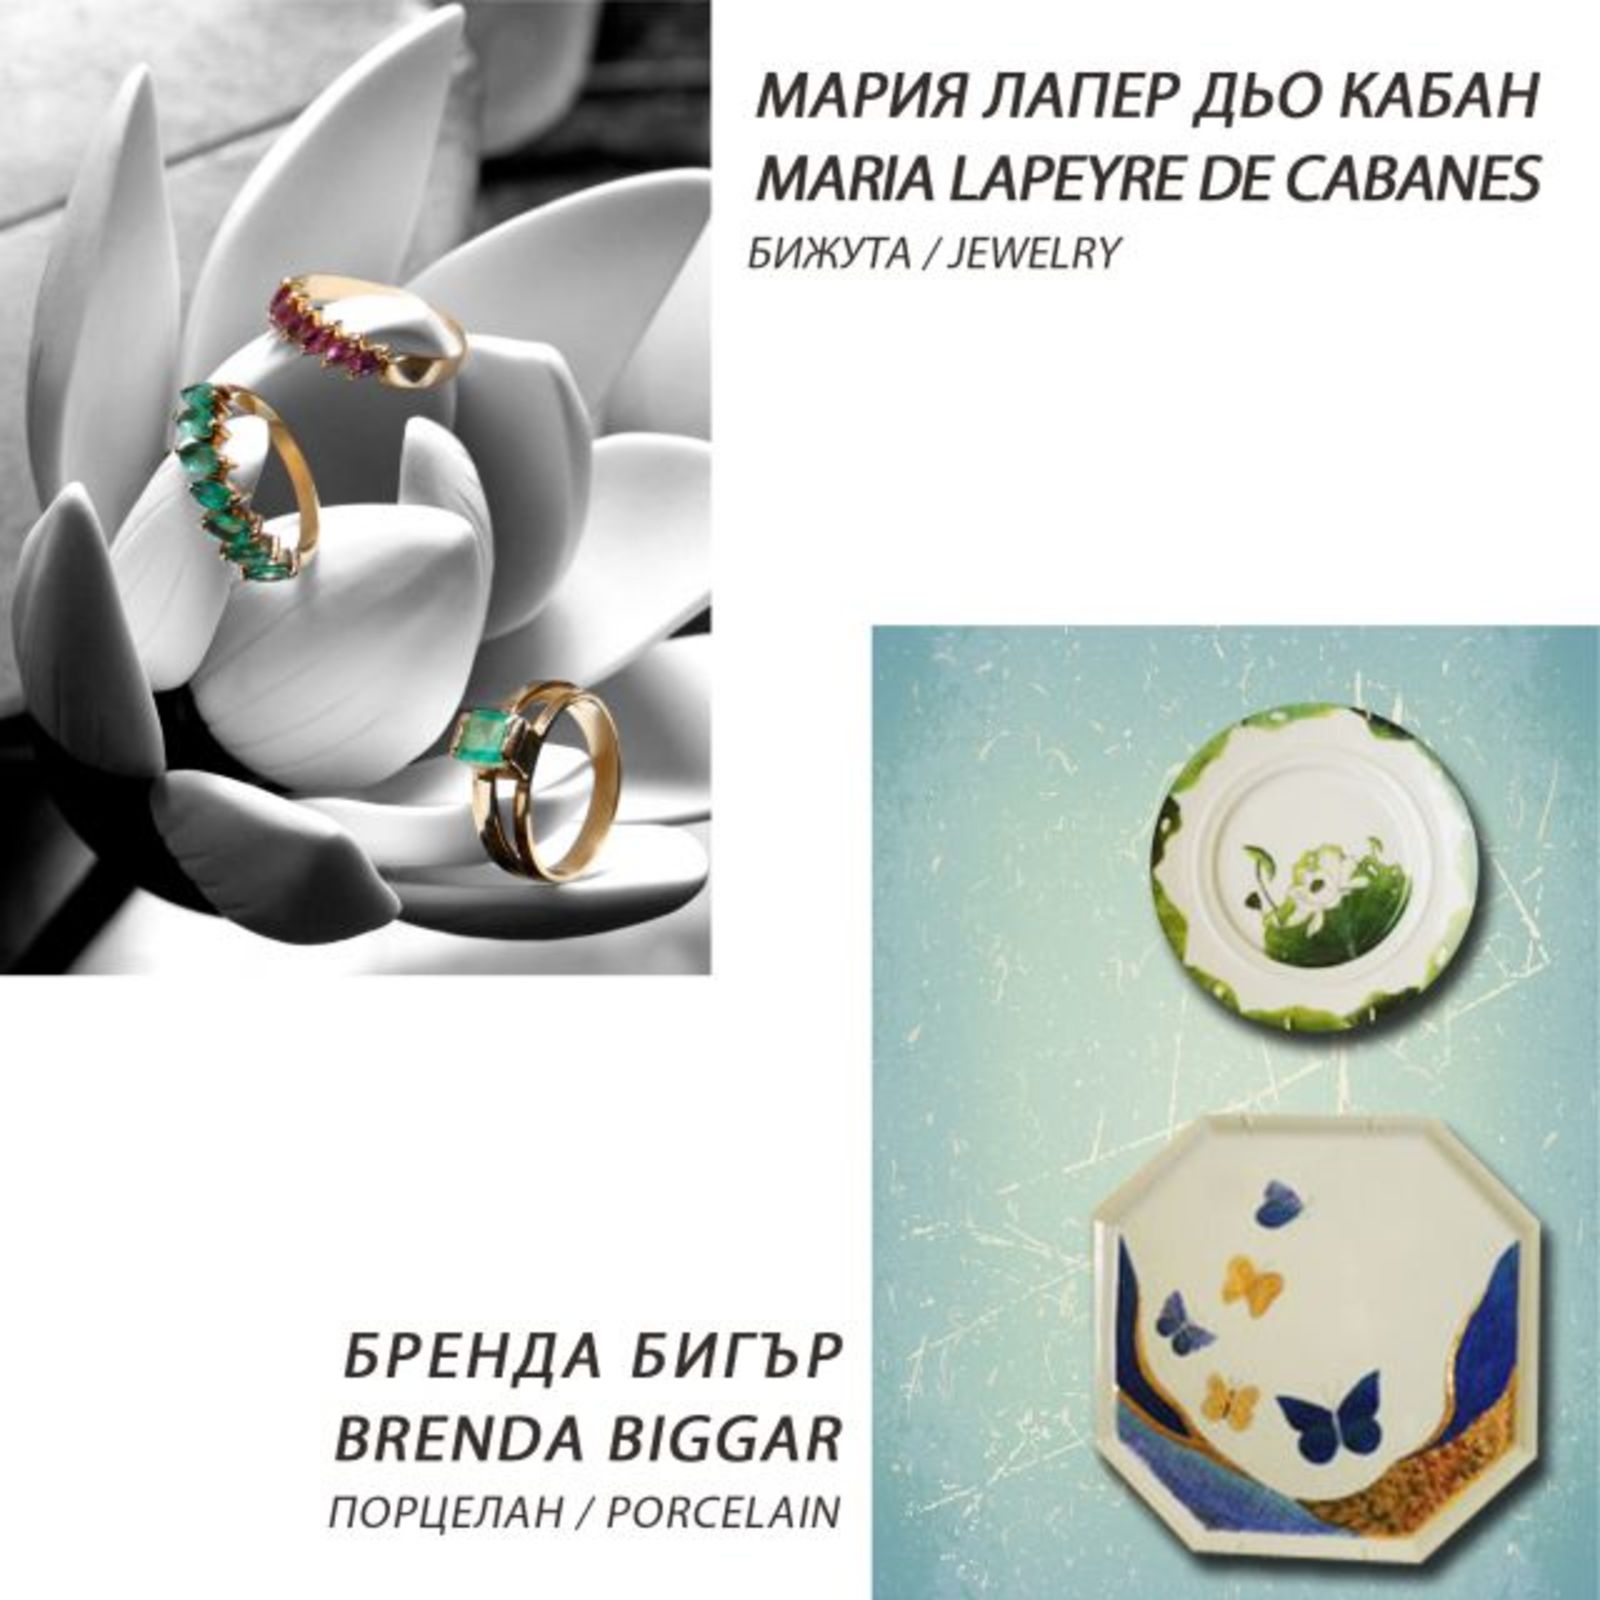 Exhibition of Maria Lapeyre de Cabanes - Jewellry and Brenda Biggar - Porcelain